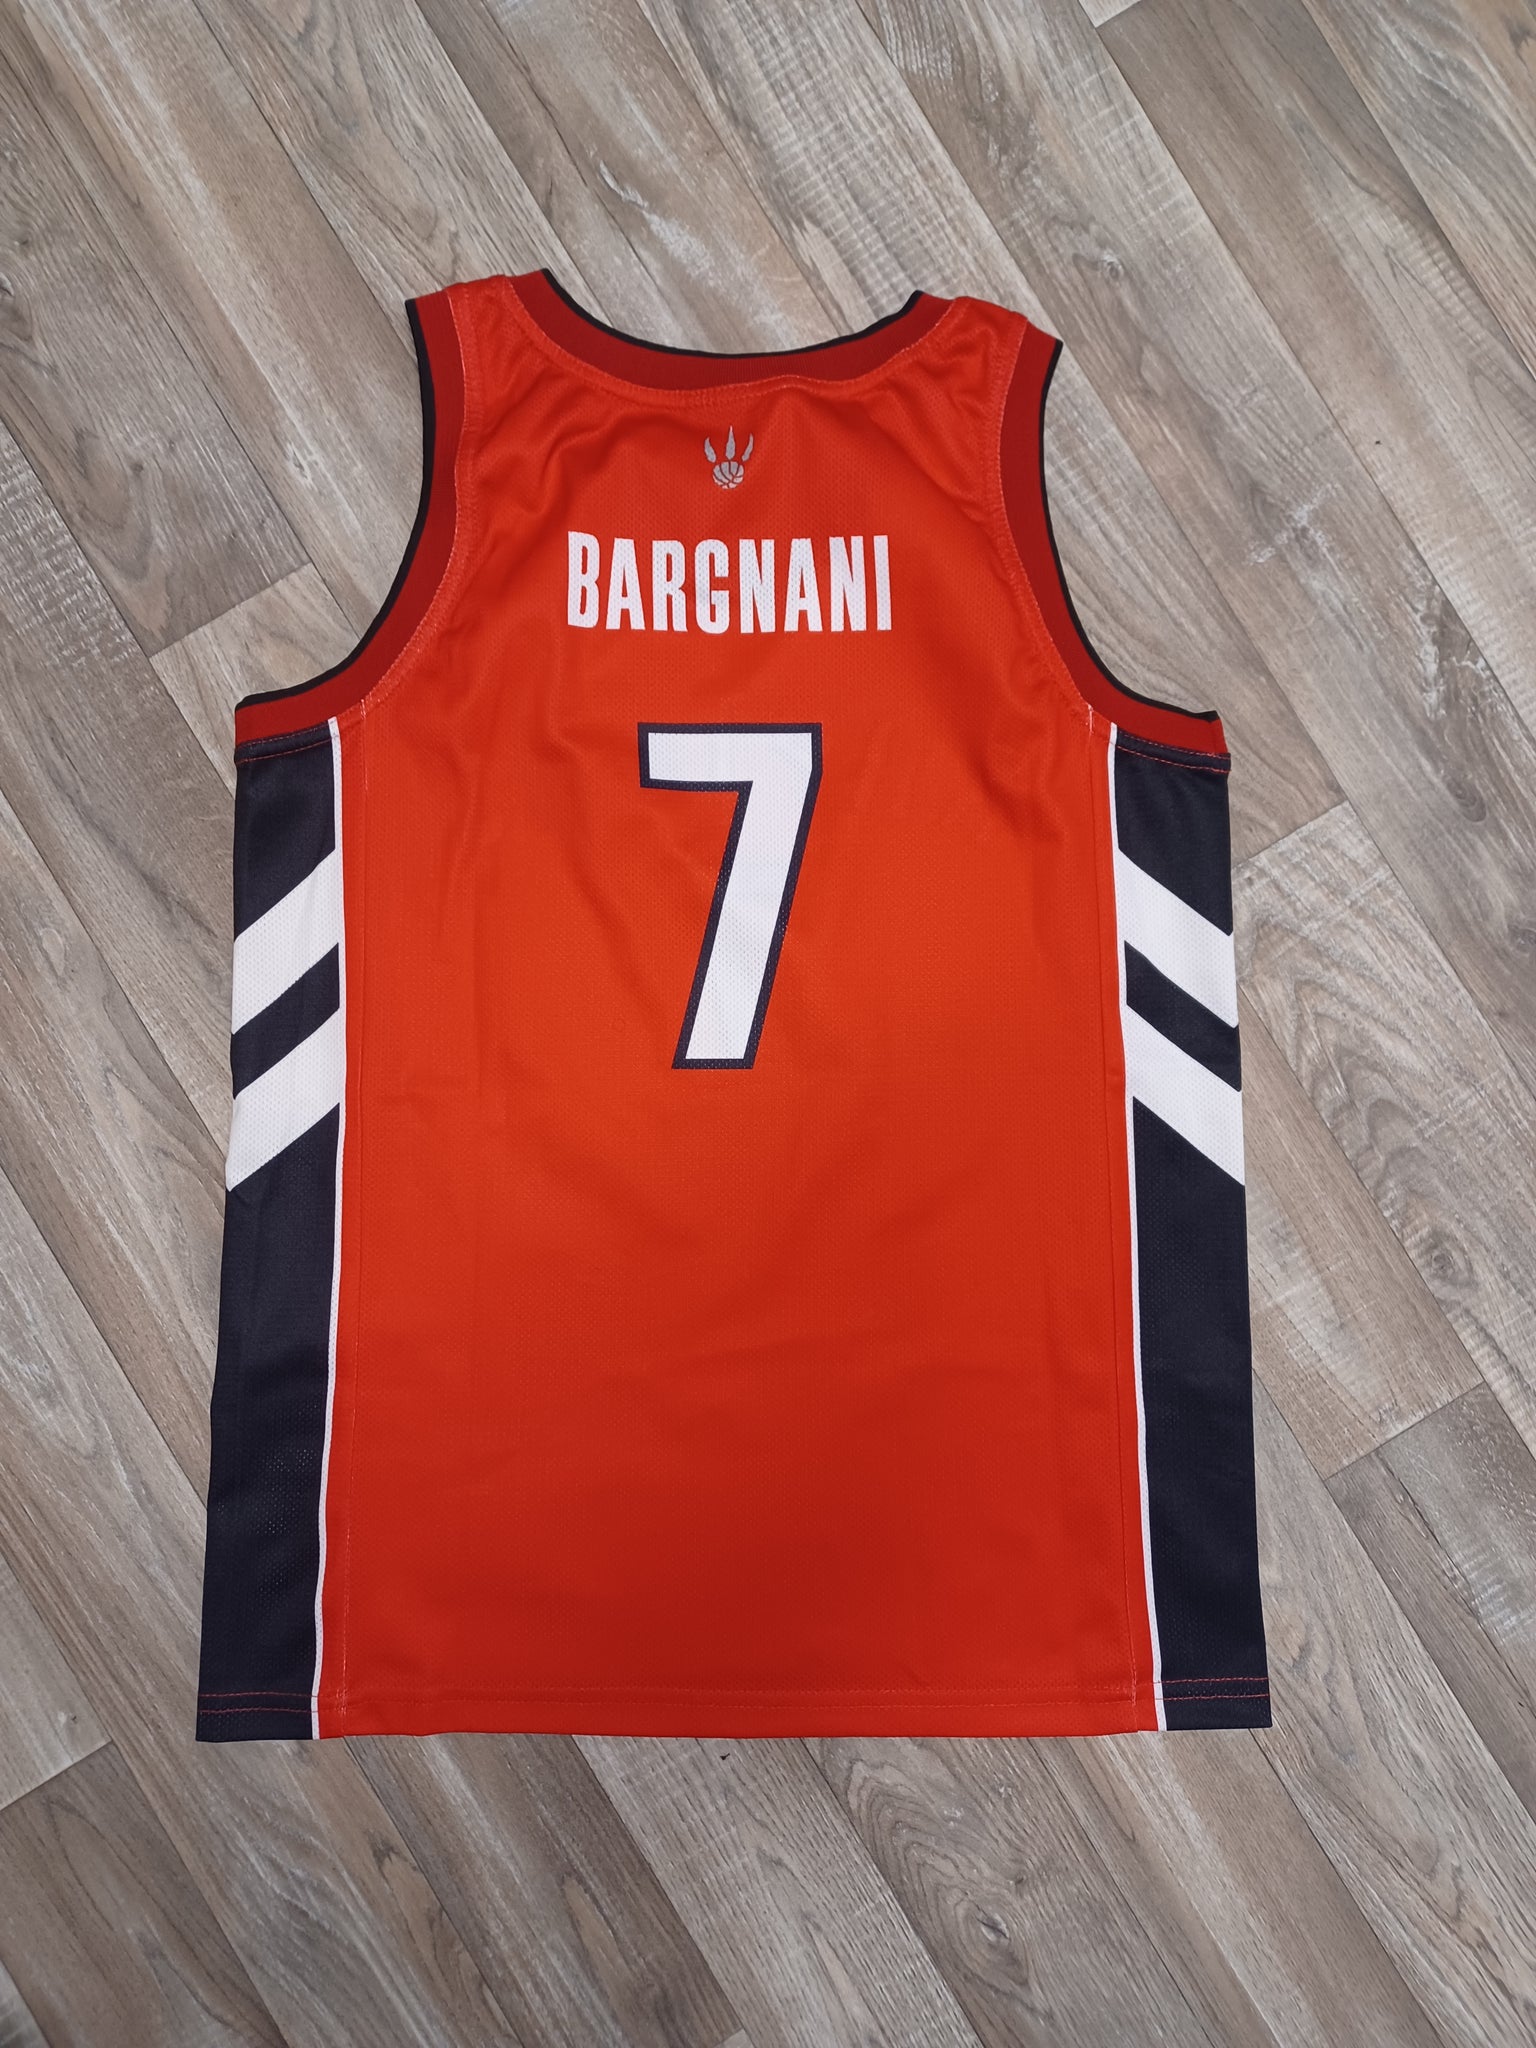 Toronto Raptors - Rare Basketball Jerseys